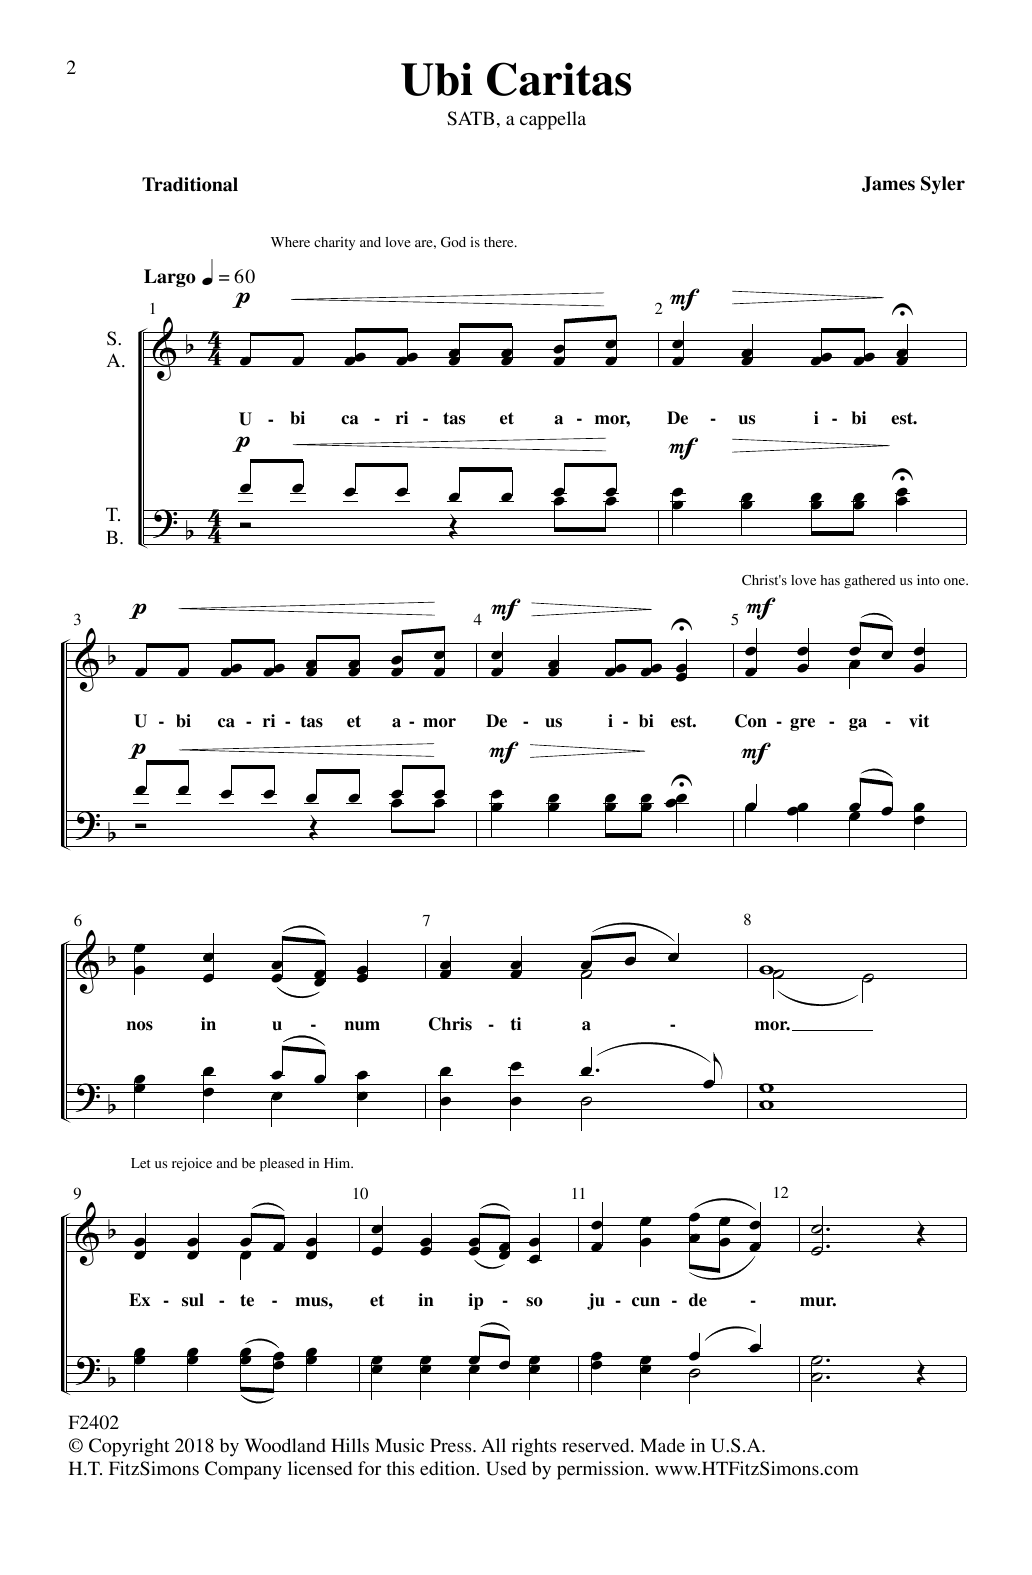 James Syler Ubi Caritas Sheet Music Notes & Chords for SATB Choir - Download or Print PDF